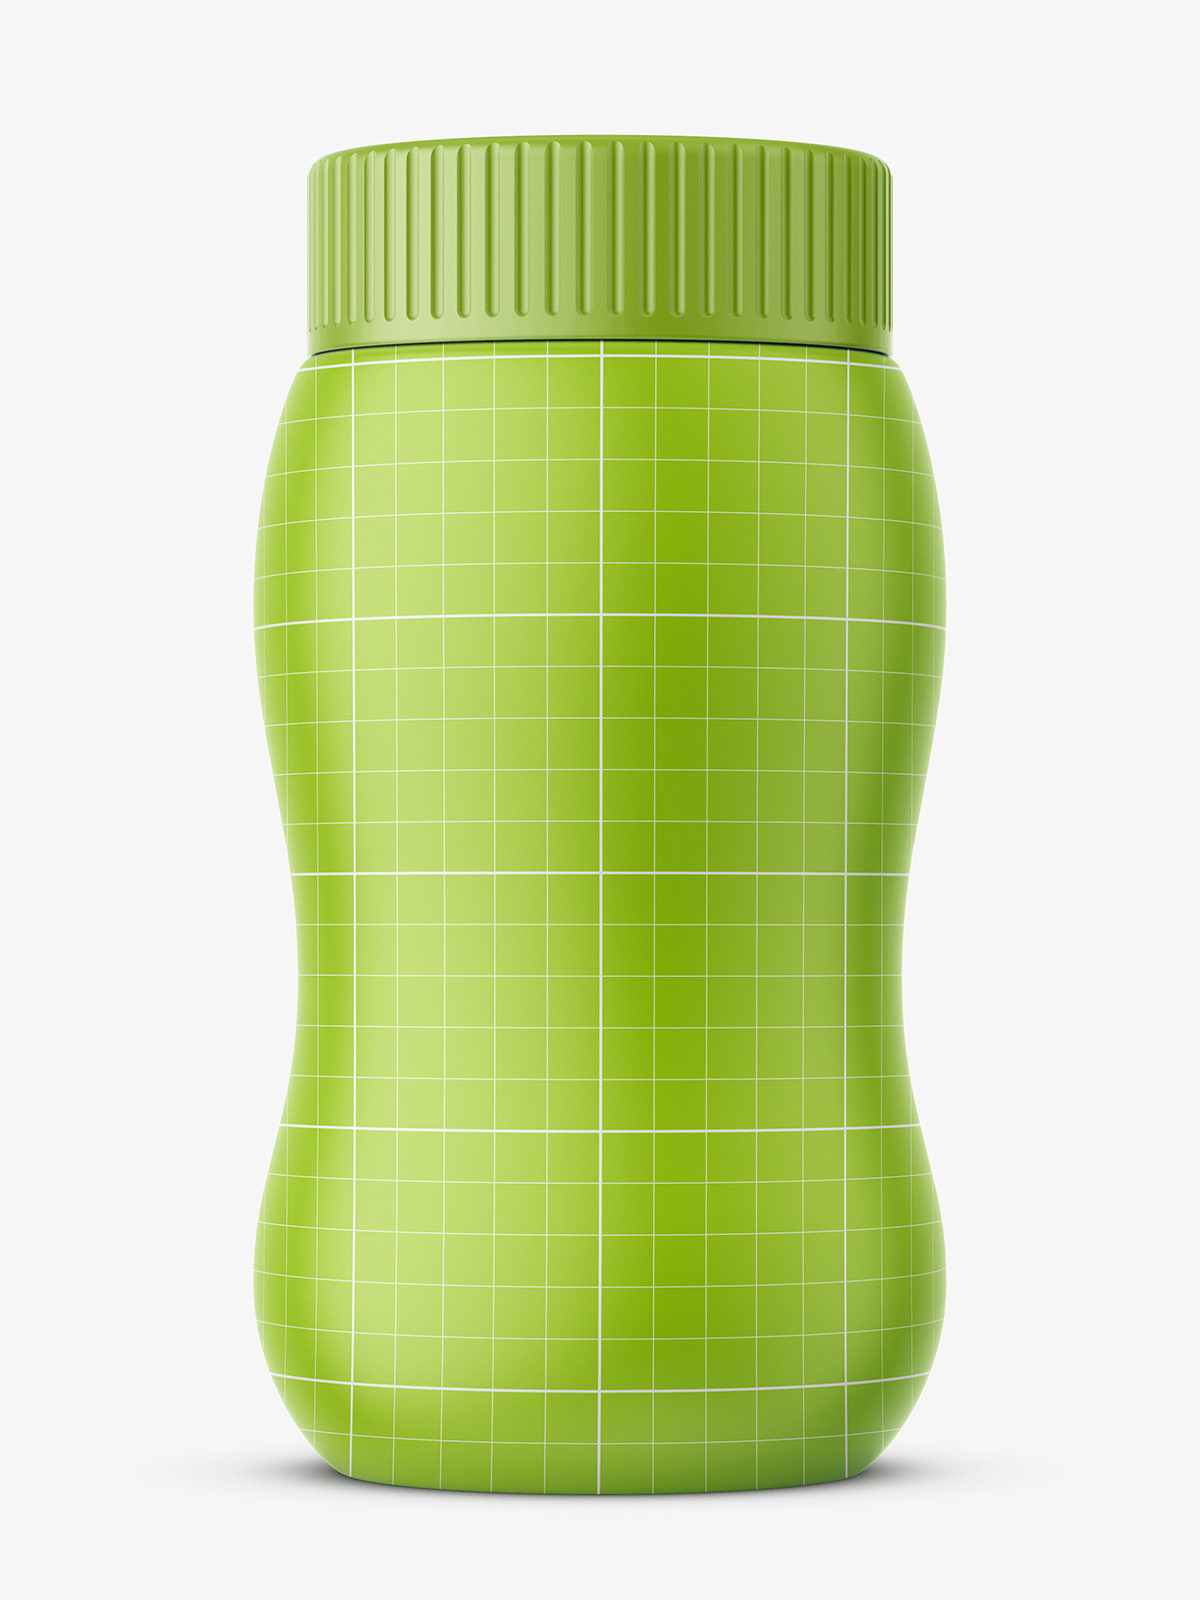 Download Universal plastic jar mockup - Smarty Mockups